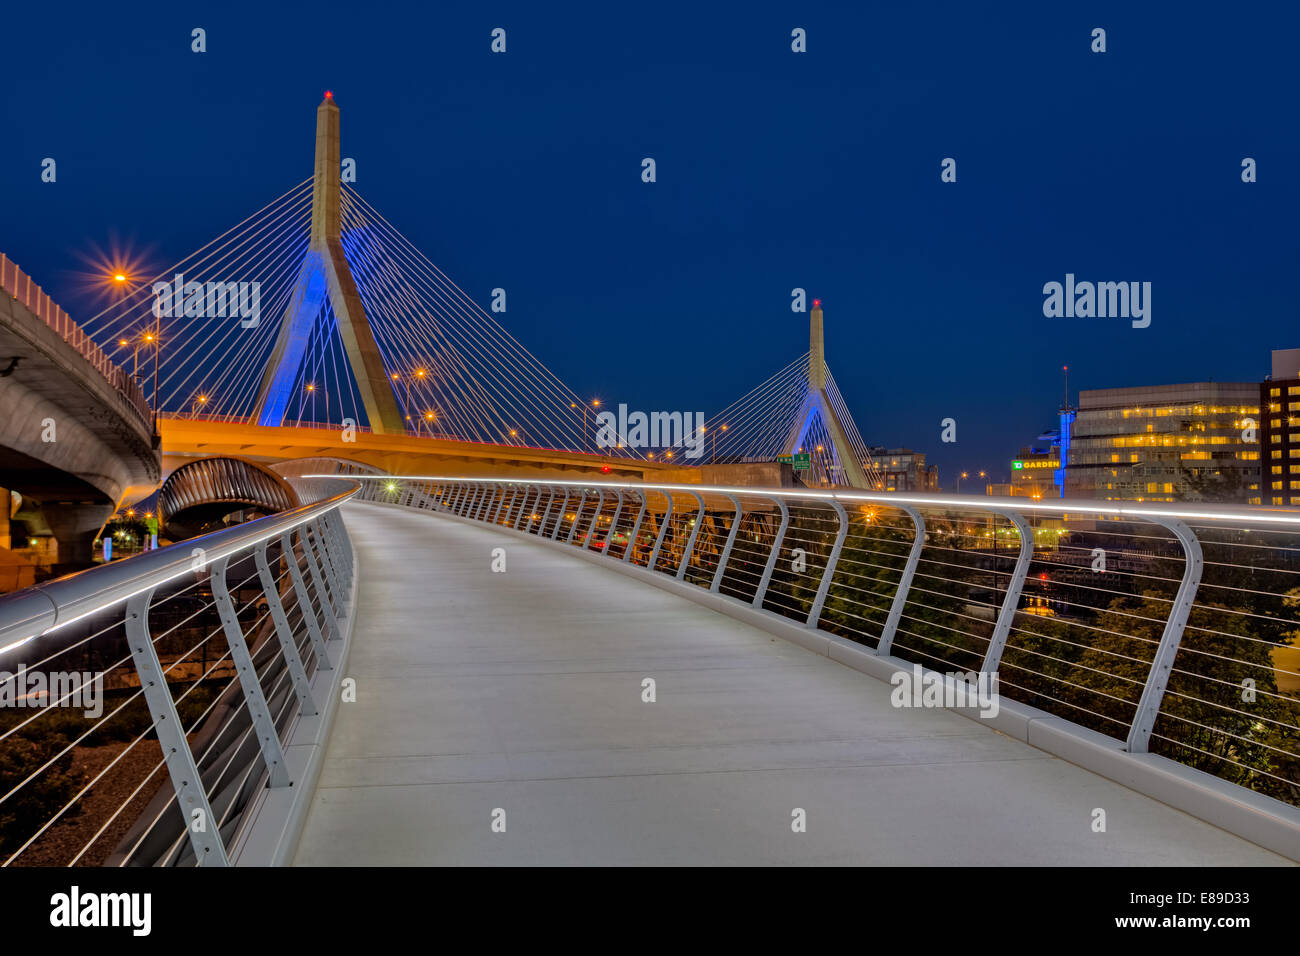 The Leonard P. Zakim Bunker Hill Memorial Bridge is a cable-stayed bridge across the Charles River in Boston, Massachusetts. Stock Photo